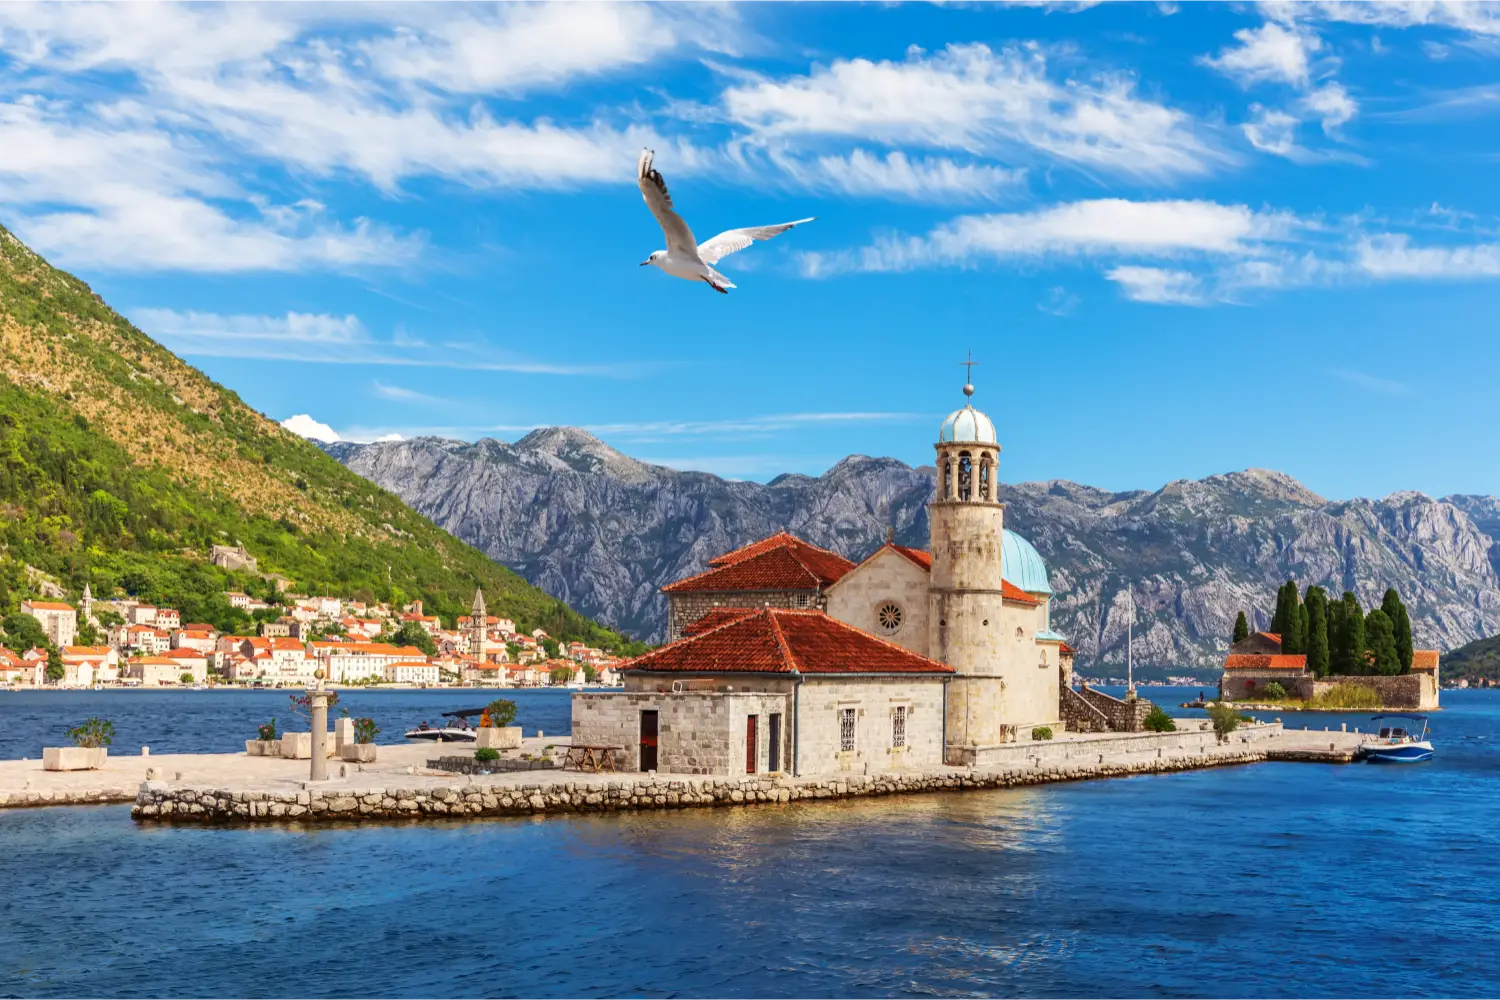 sveti stefan in montenegro image